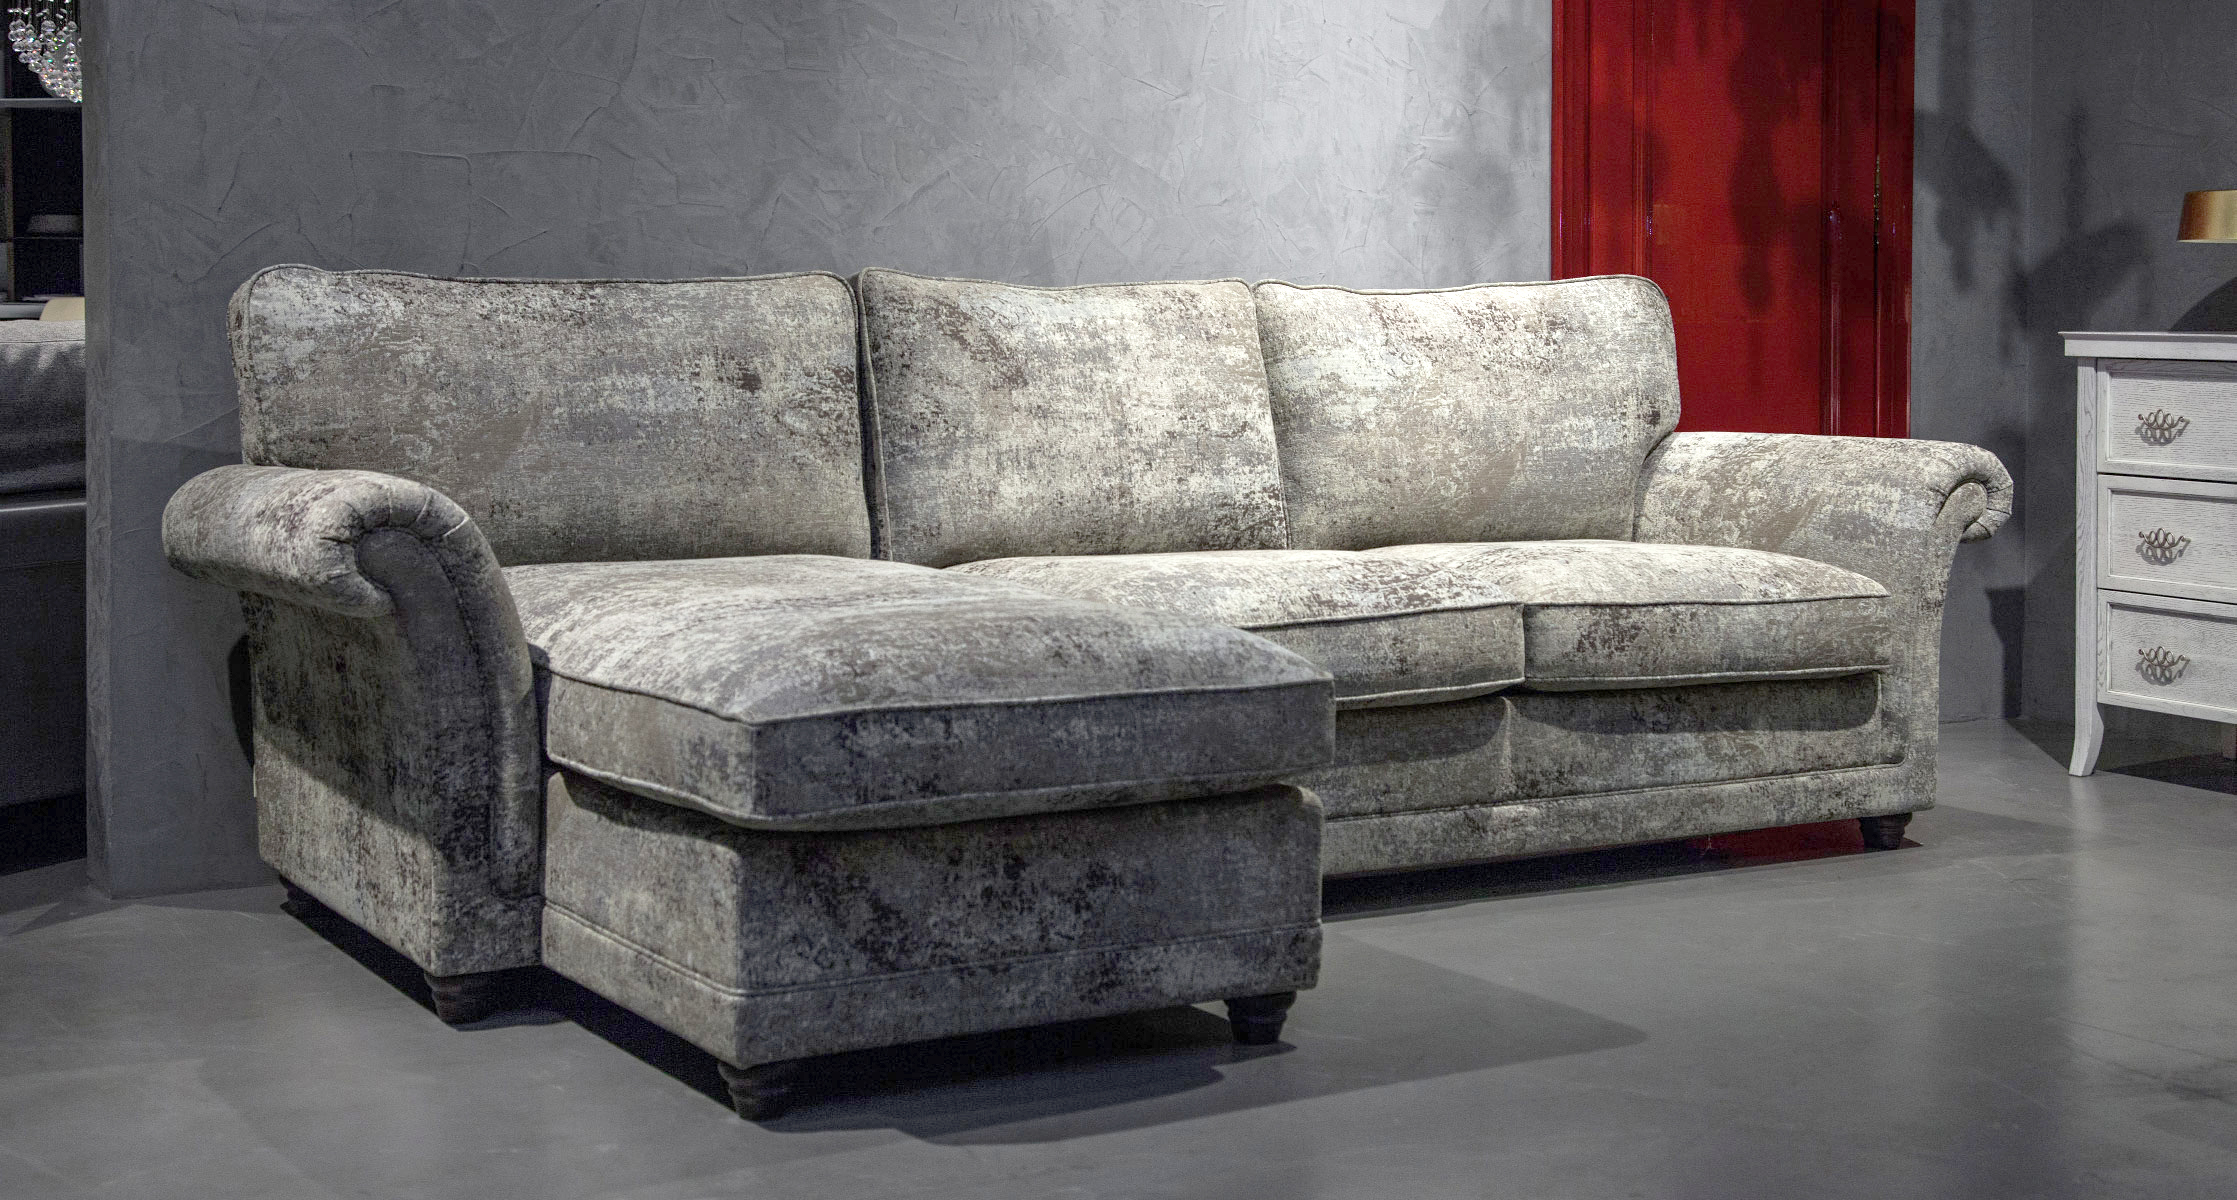 Ткань stone. Estetica Verona диван. Ткань мебельная Terra.